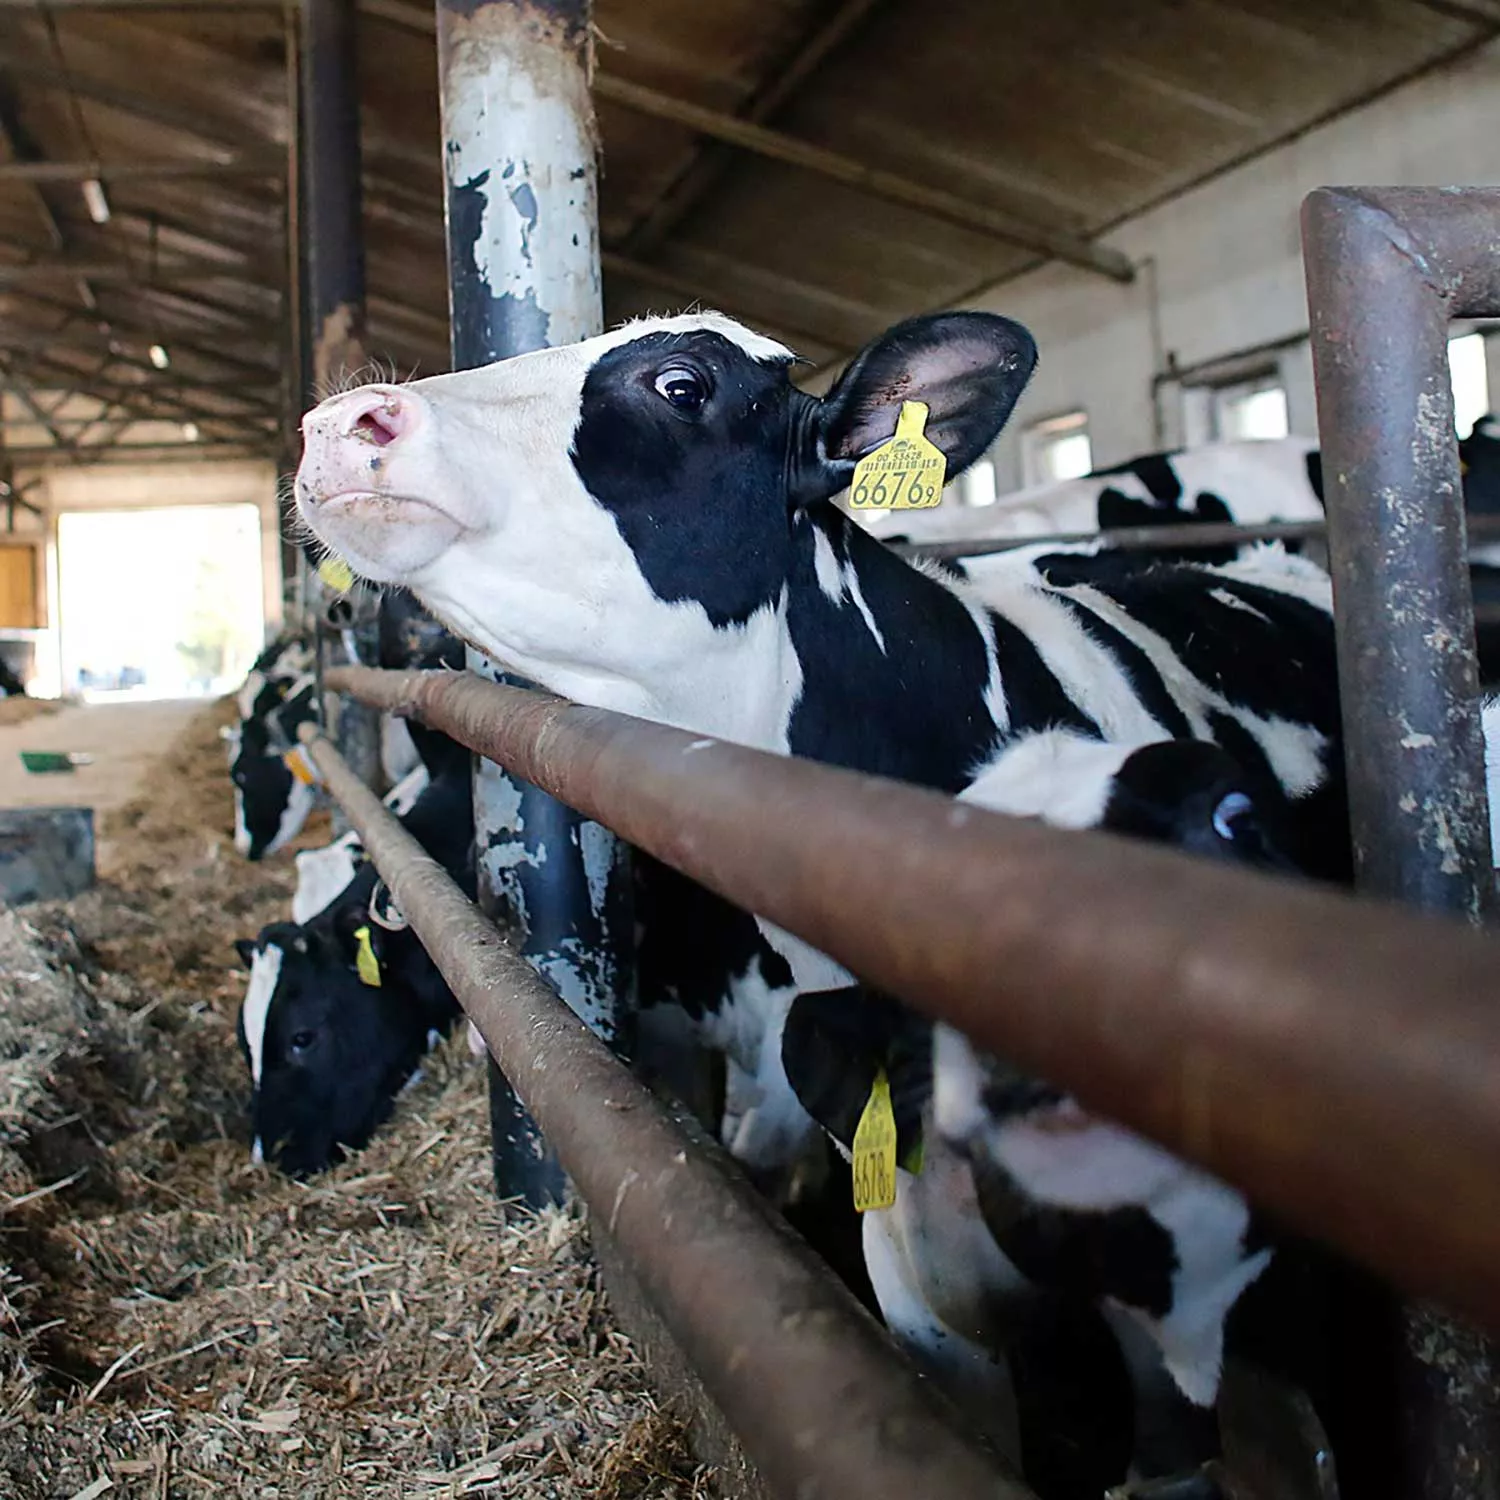 Avian “bird flu” outbreak strikes dairy farms across the nation